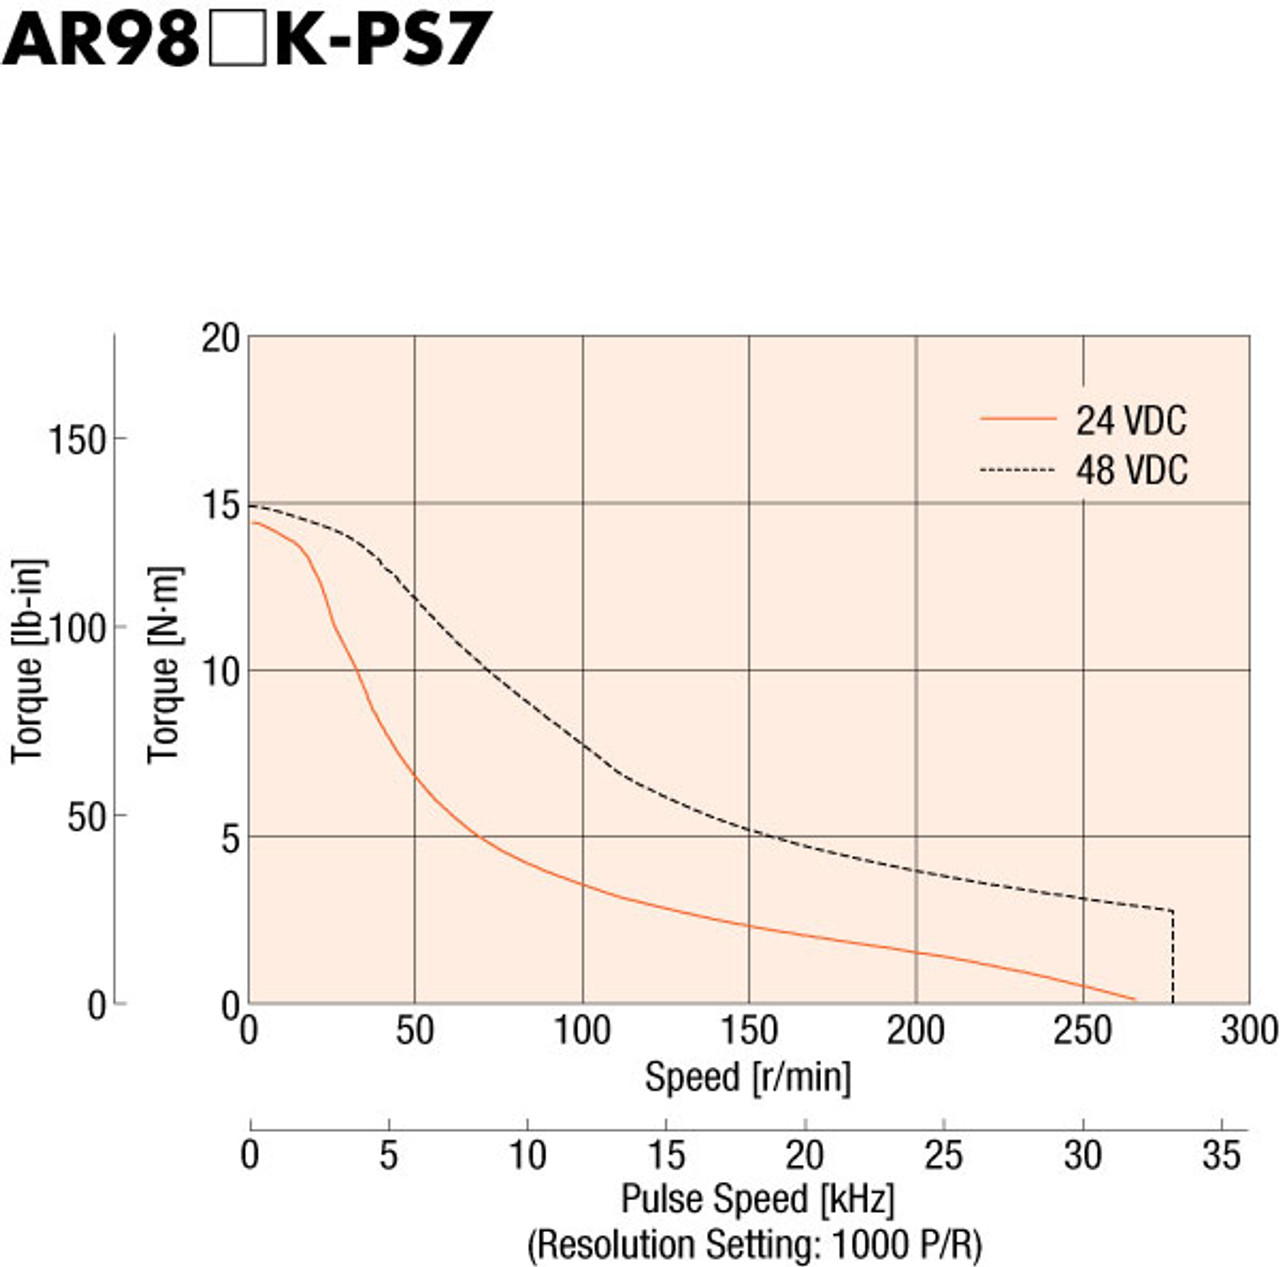 AR98AK-PS7-3 - Speed-Torque